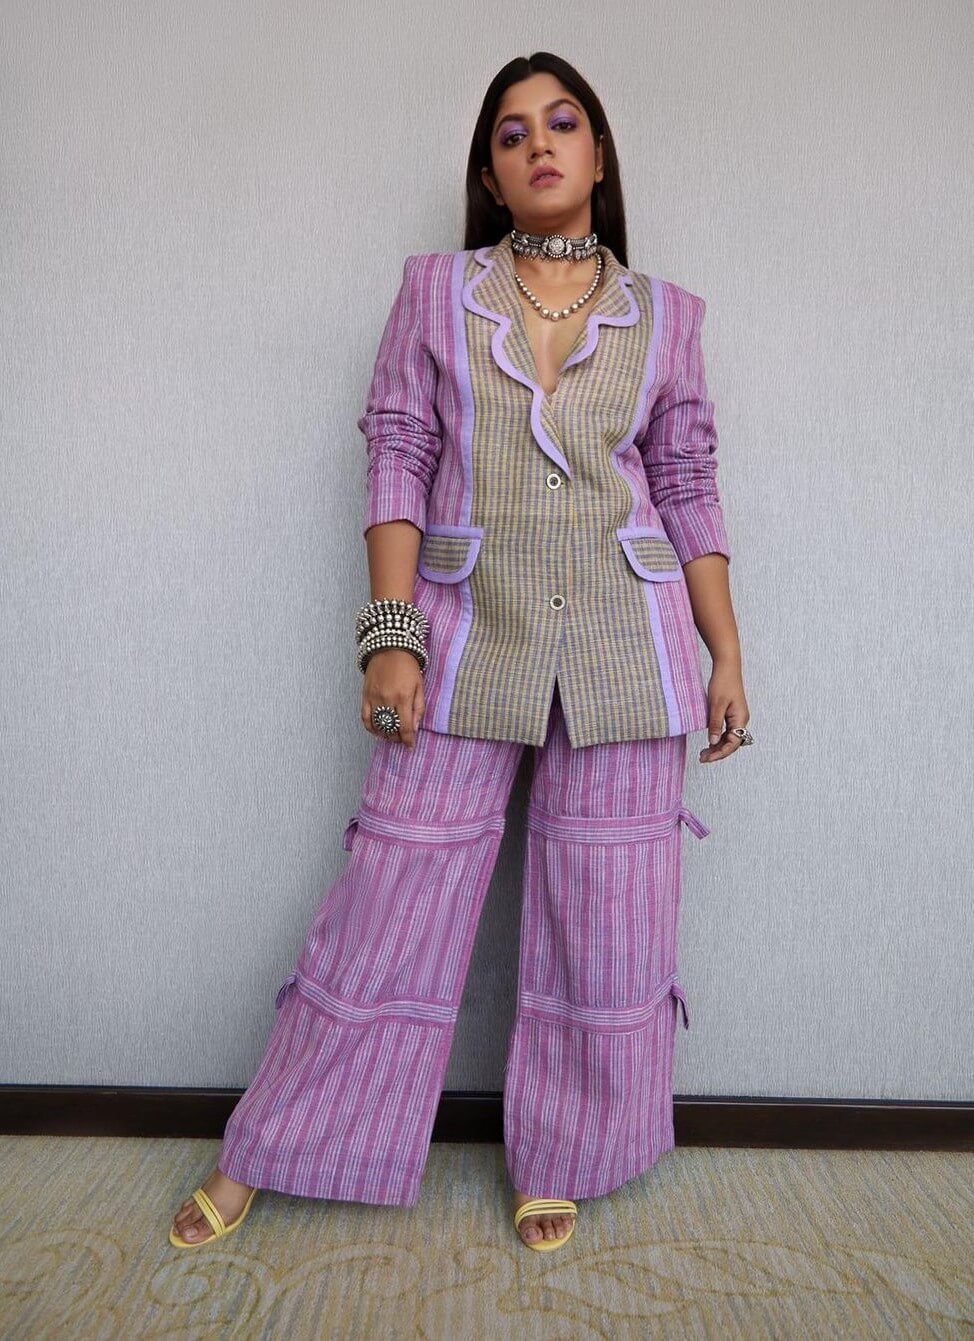 Aparna Balamurali Quirky Look In Purple Striped Blazer With Purple Makeup Look